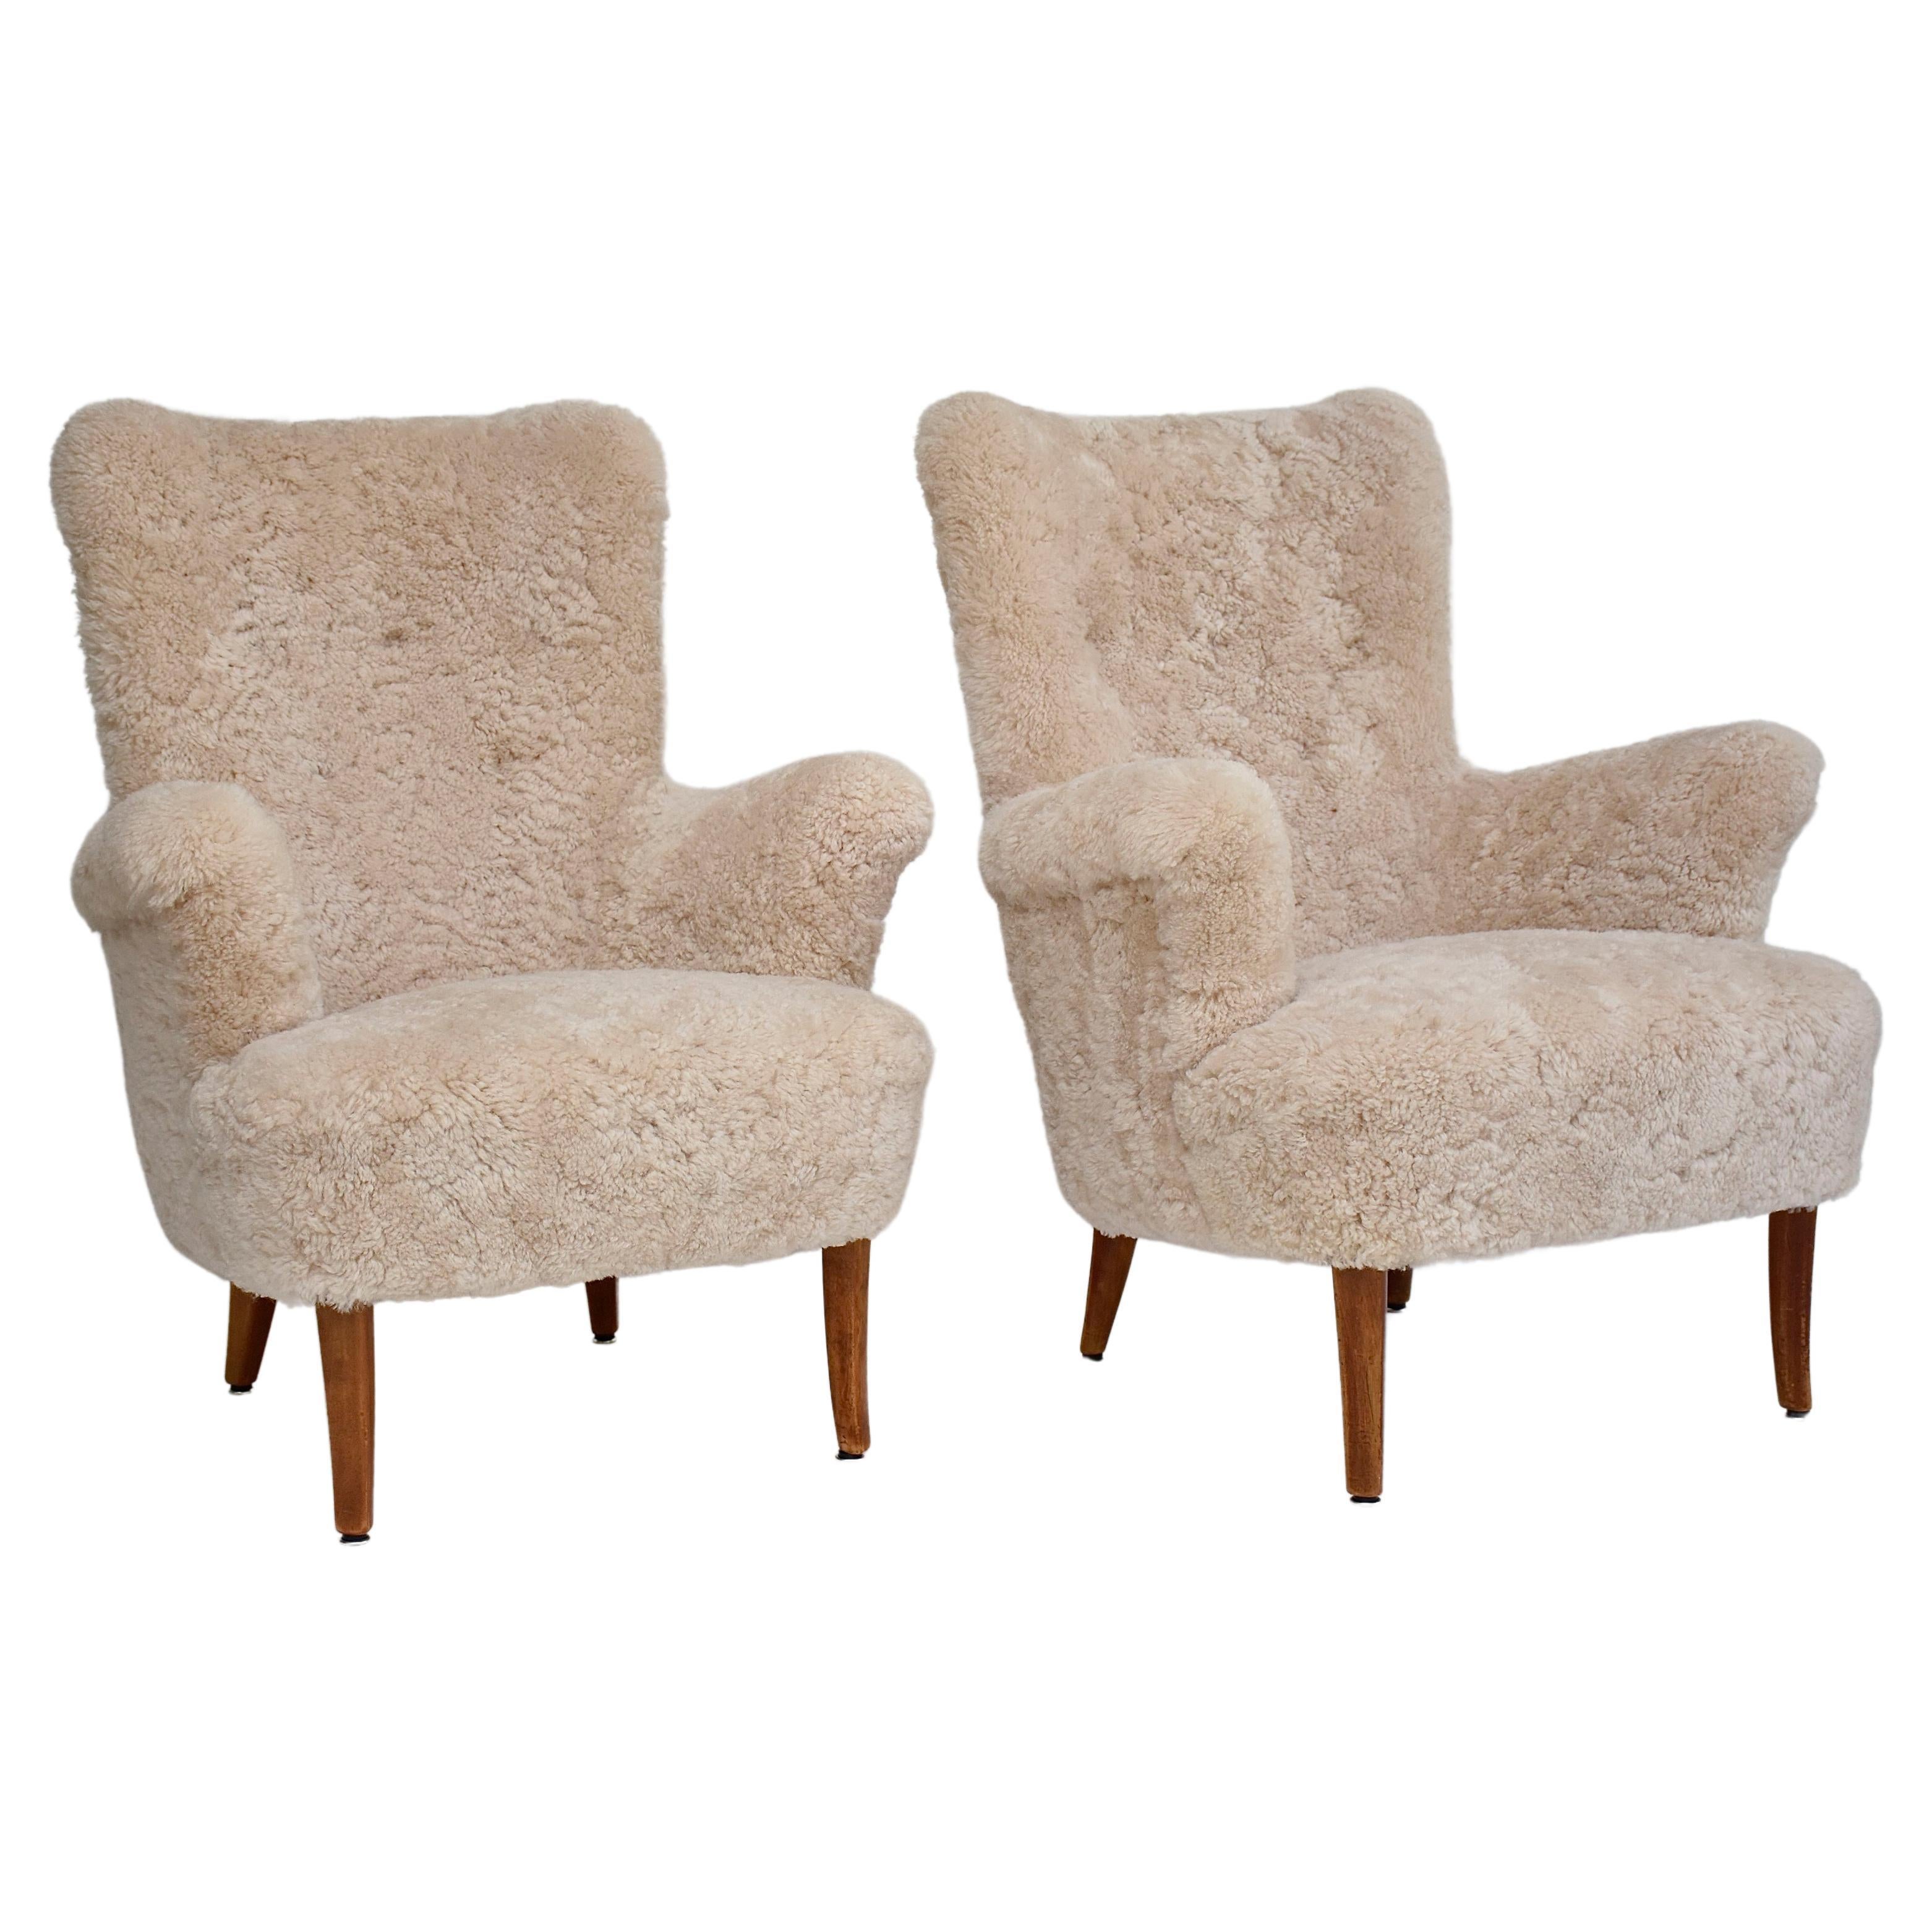 Pair of Scandinavian armchairs 'Stora Furulid' in sheepskin by Carl Malmsten